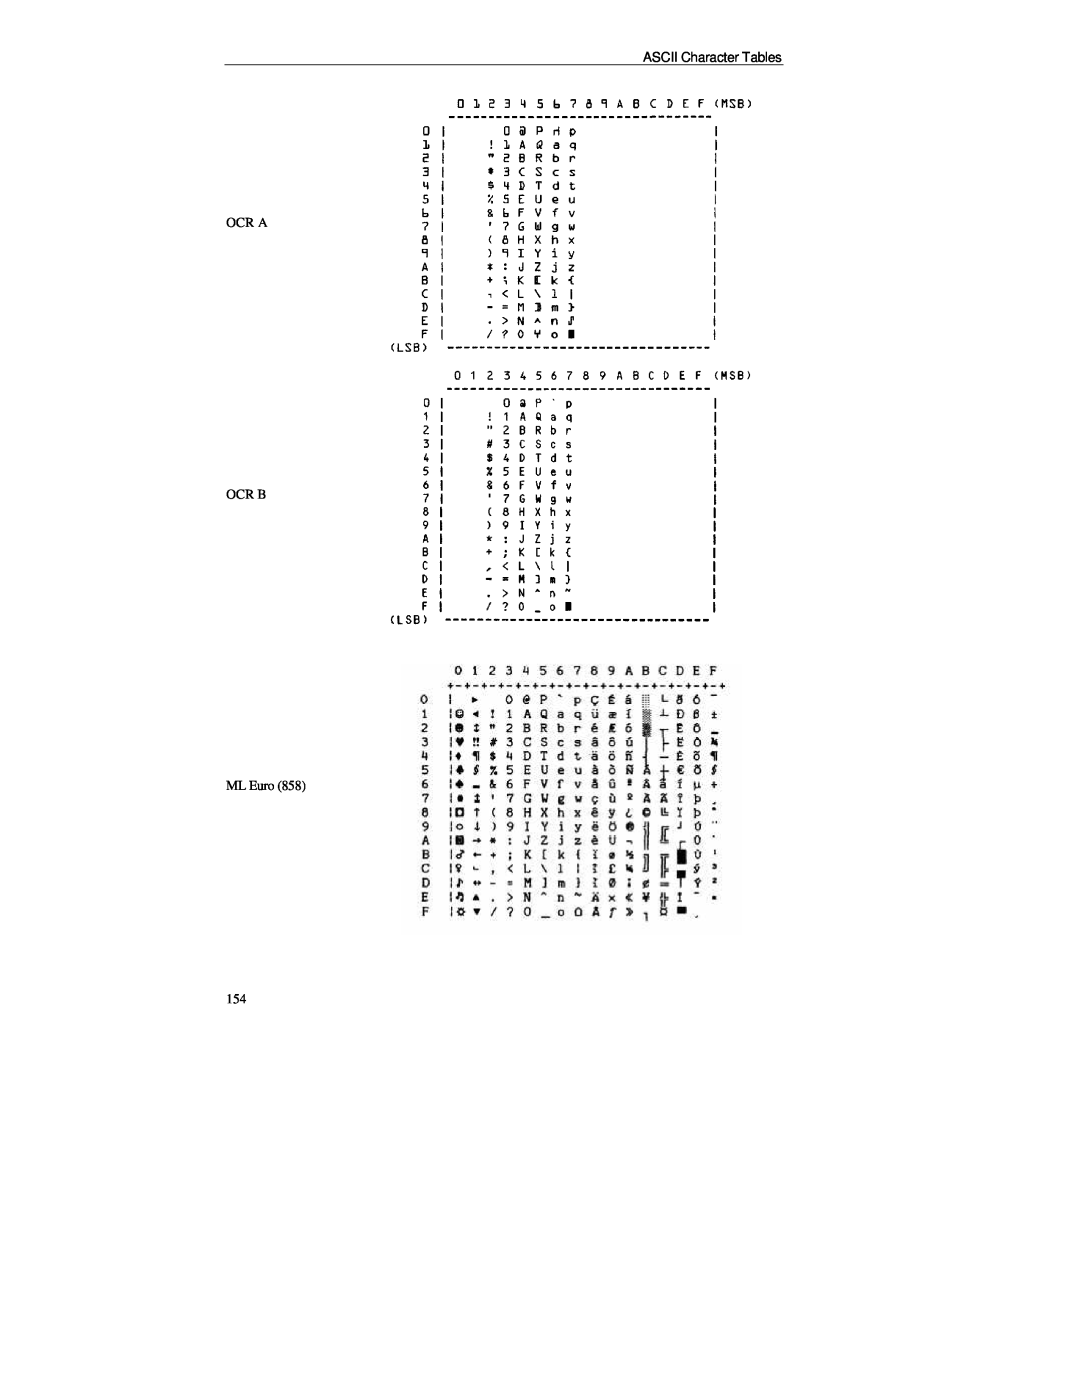 Printek FormsPro 4000se Series, PrintMaster 850 Series manual ASCII Character Tables, OCR A OCR B ML Euro 